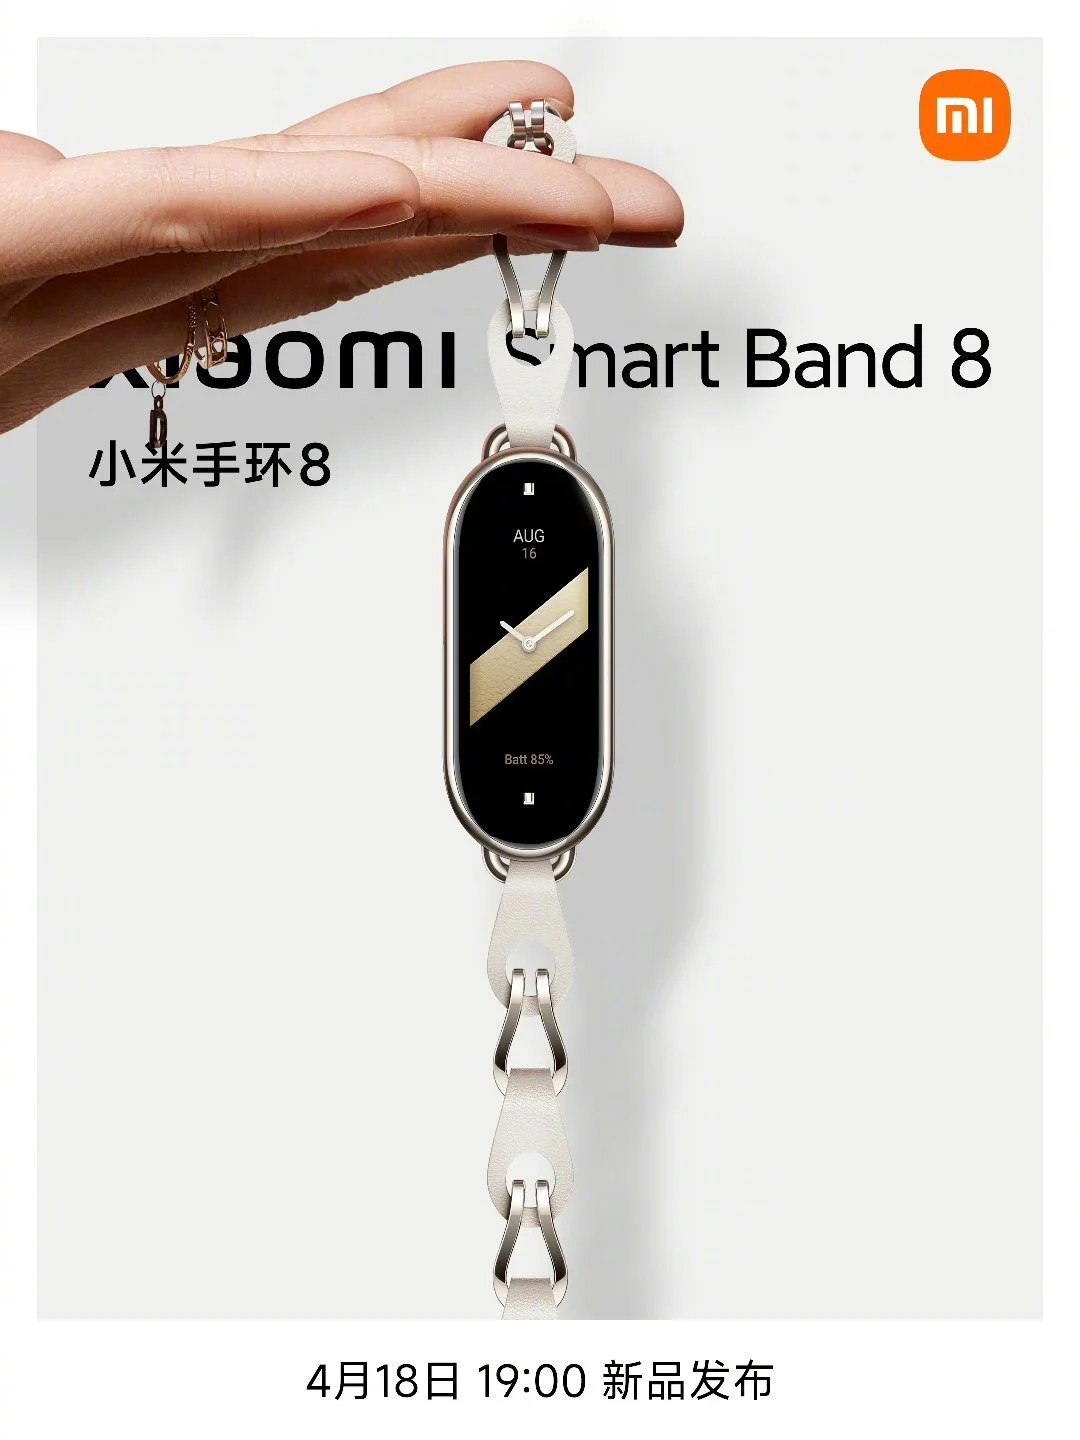 Le Xiaomi Band 8. // Source : Xiaomi